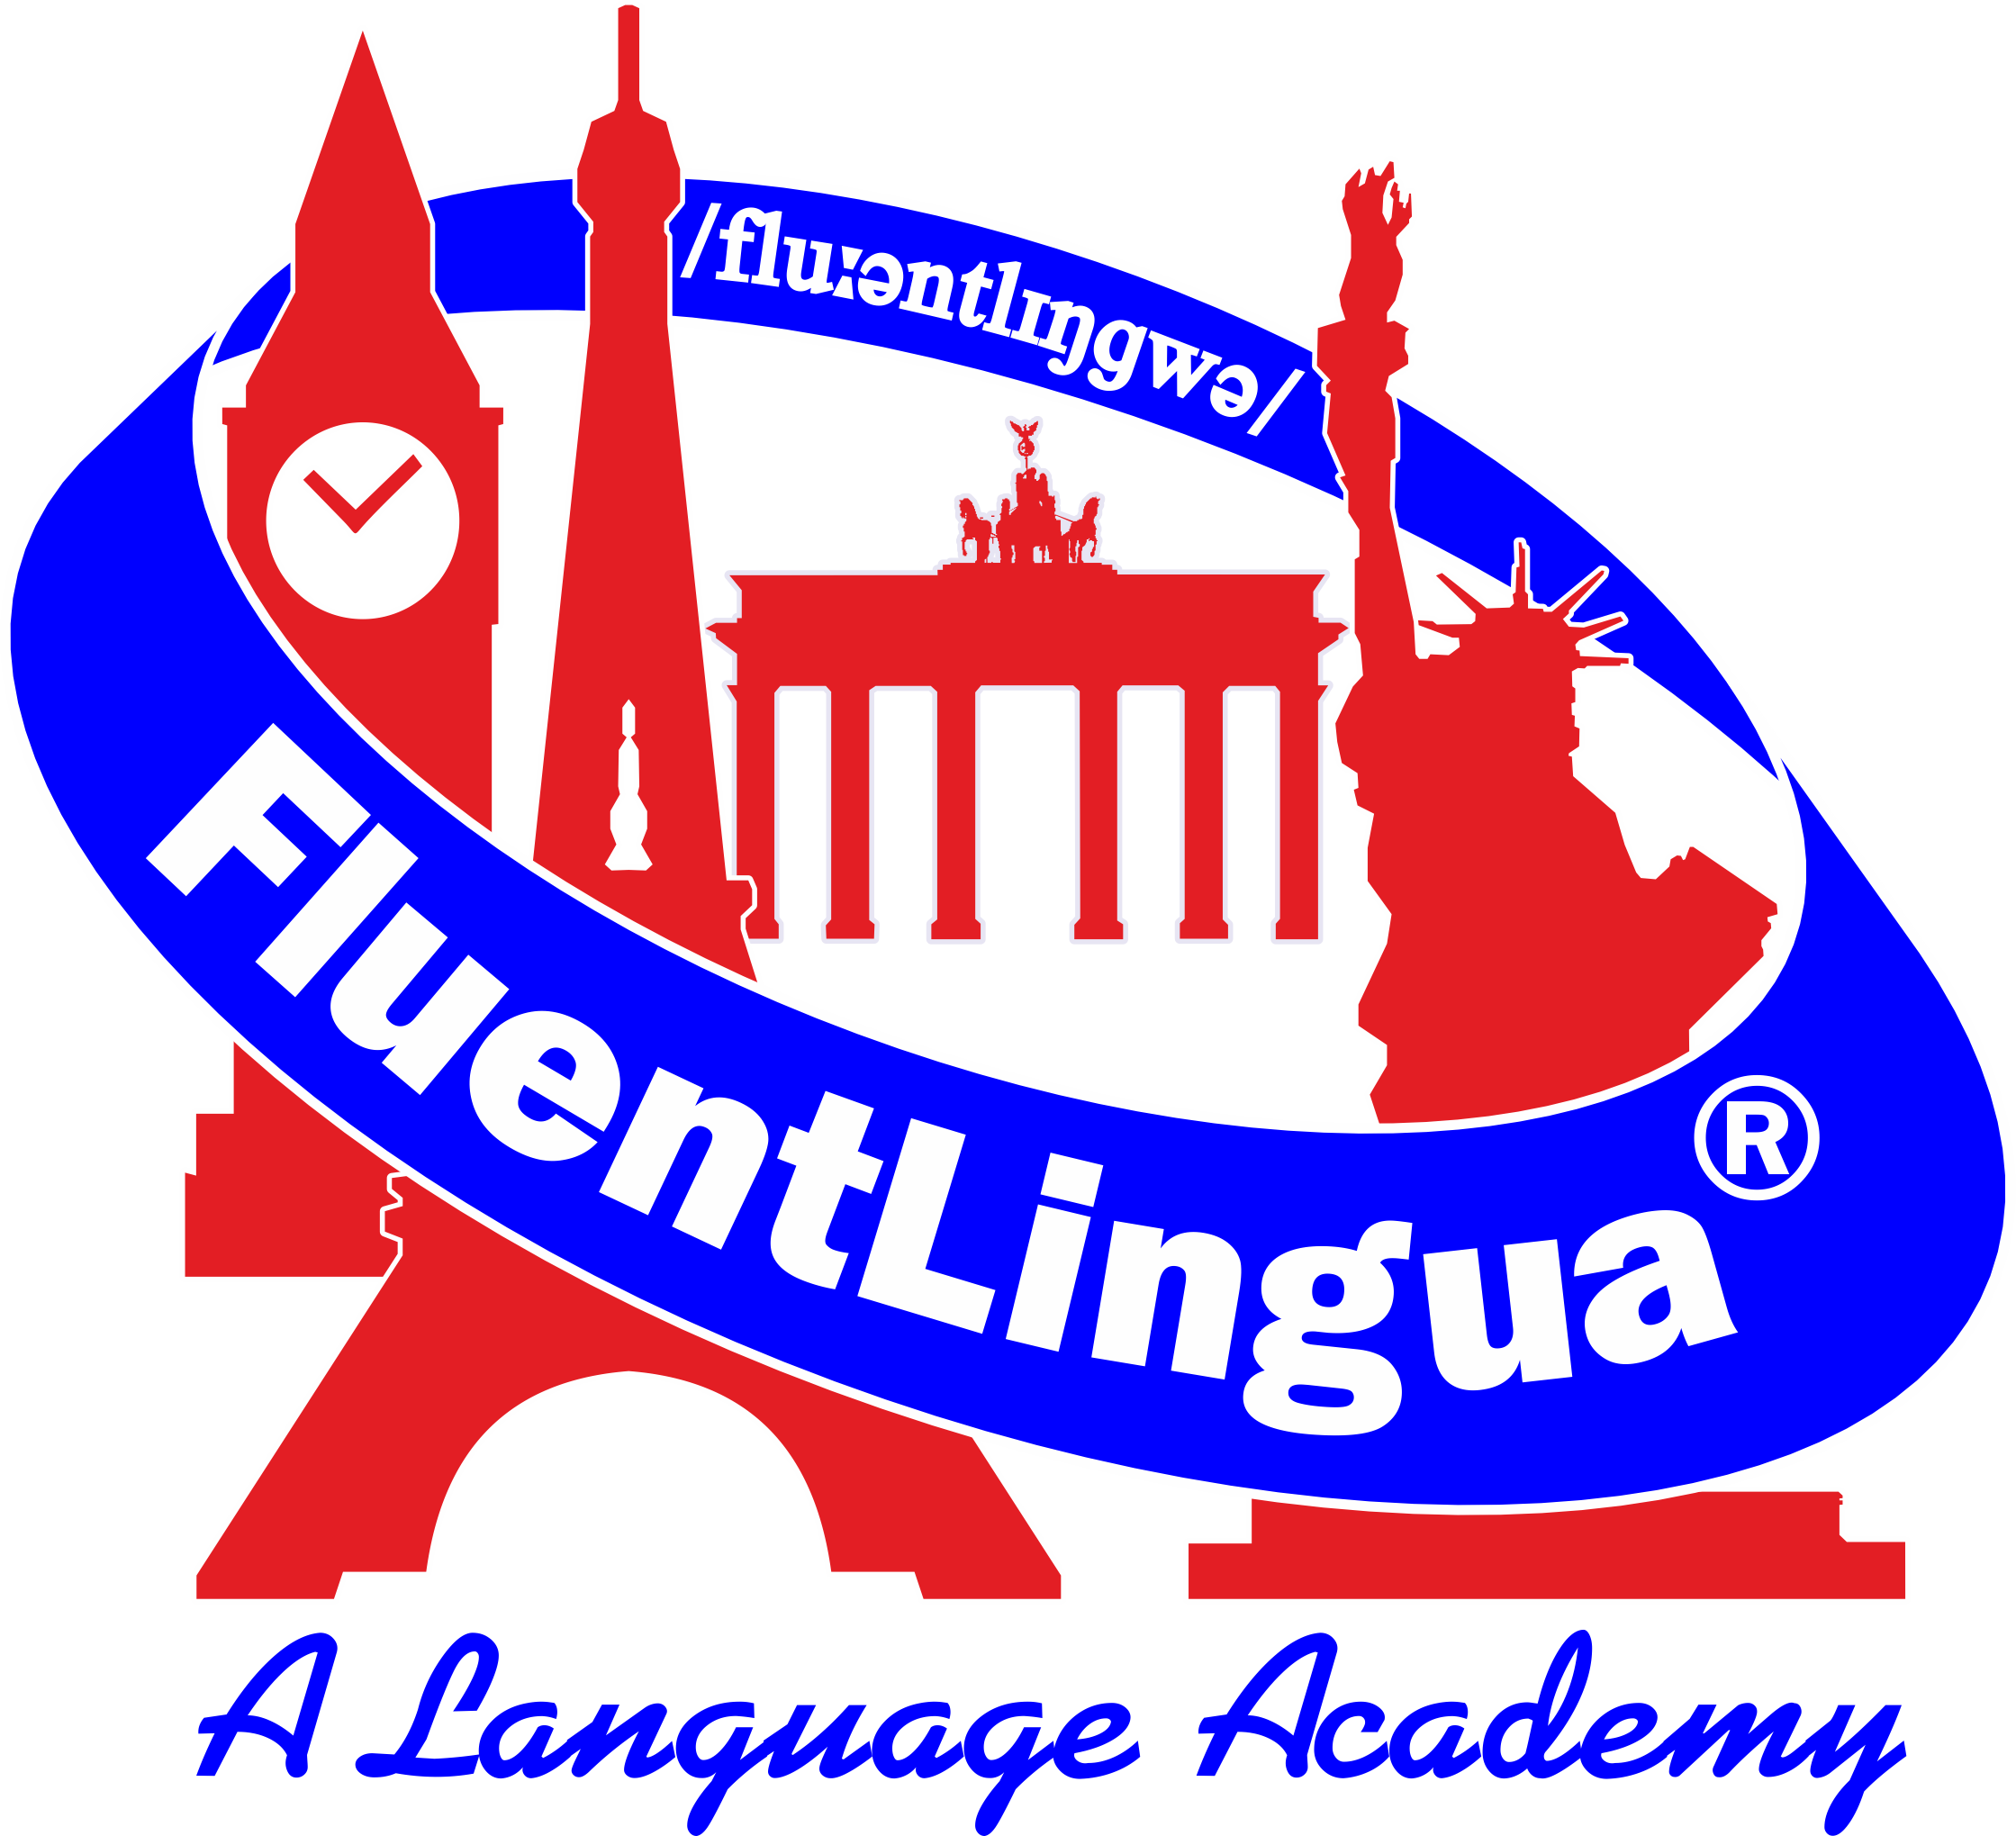 Fluentlingua Logo